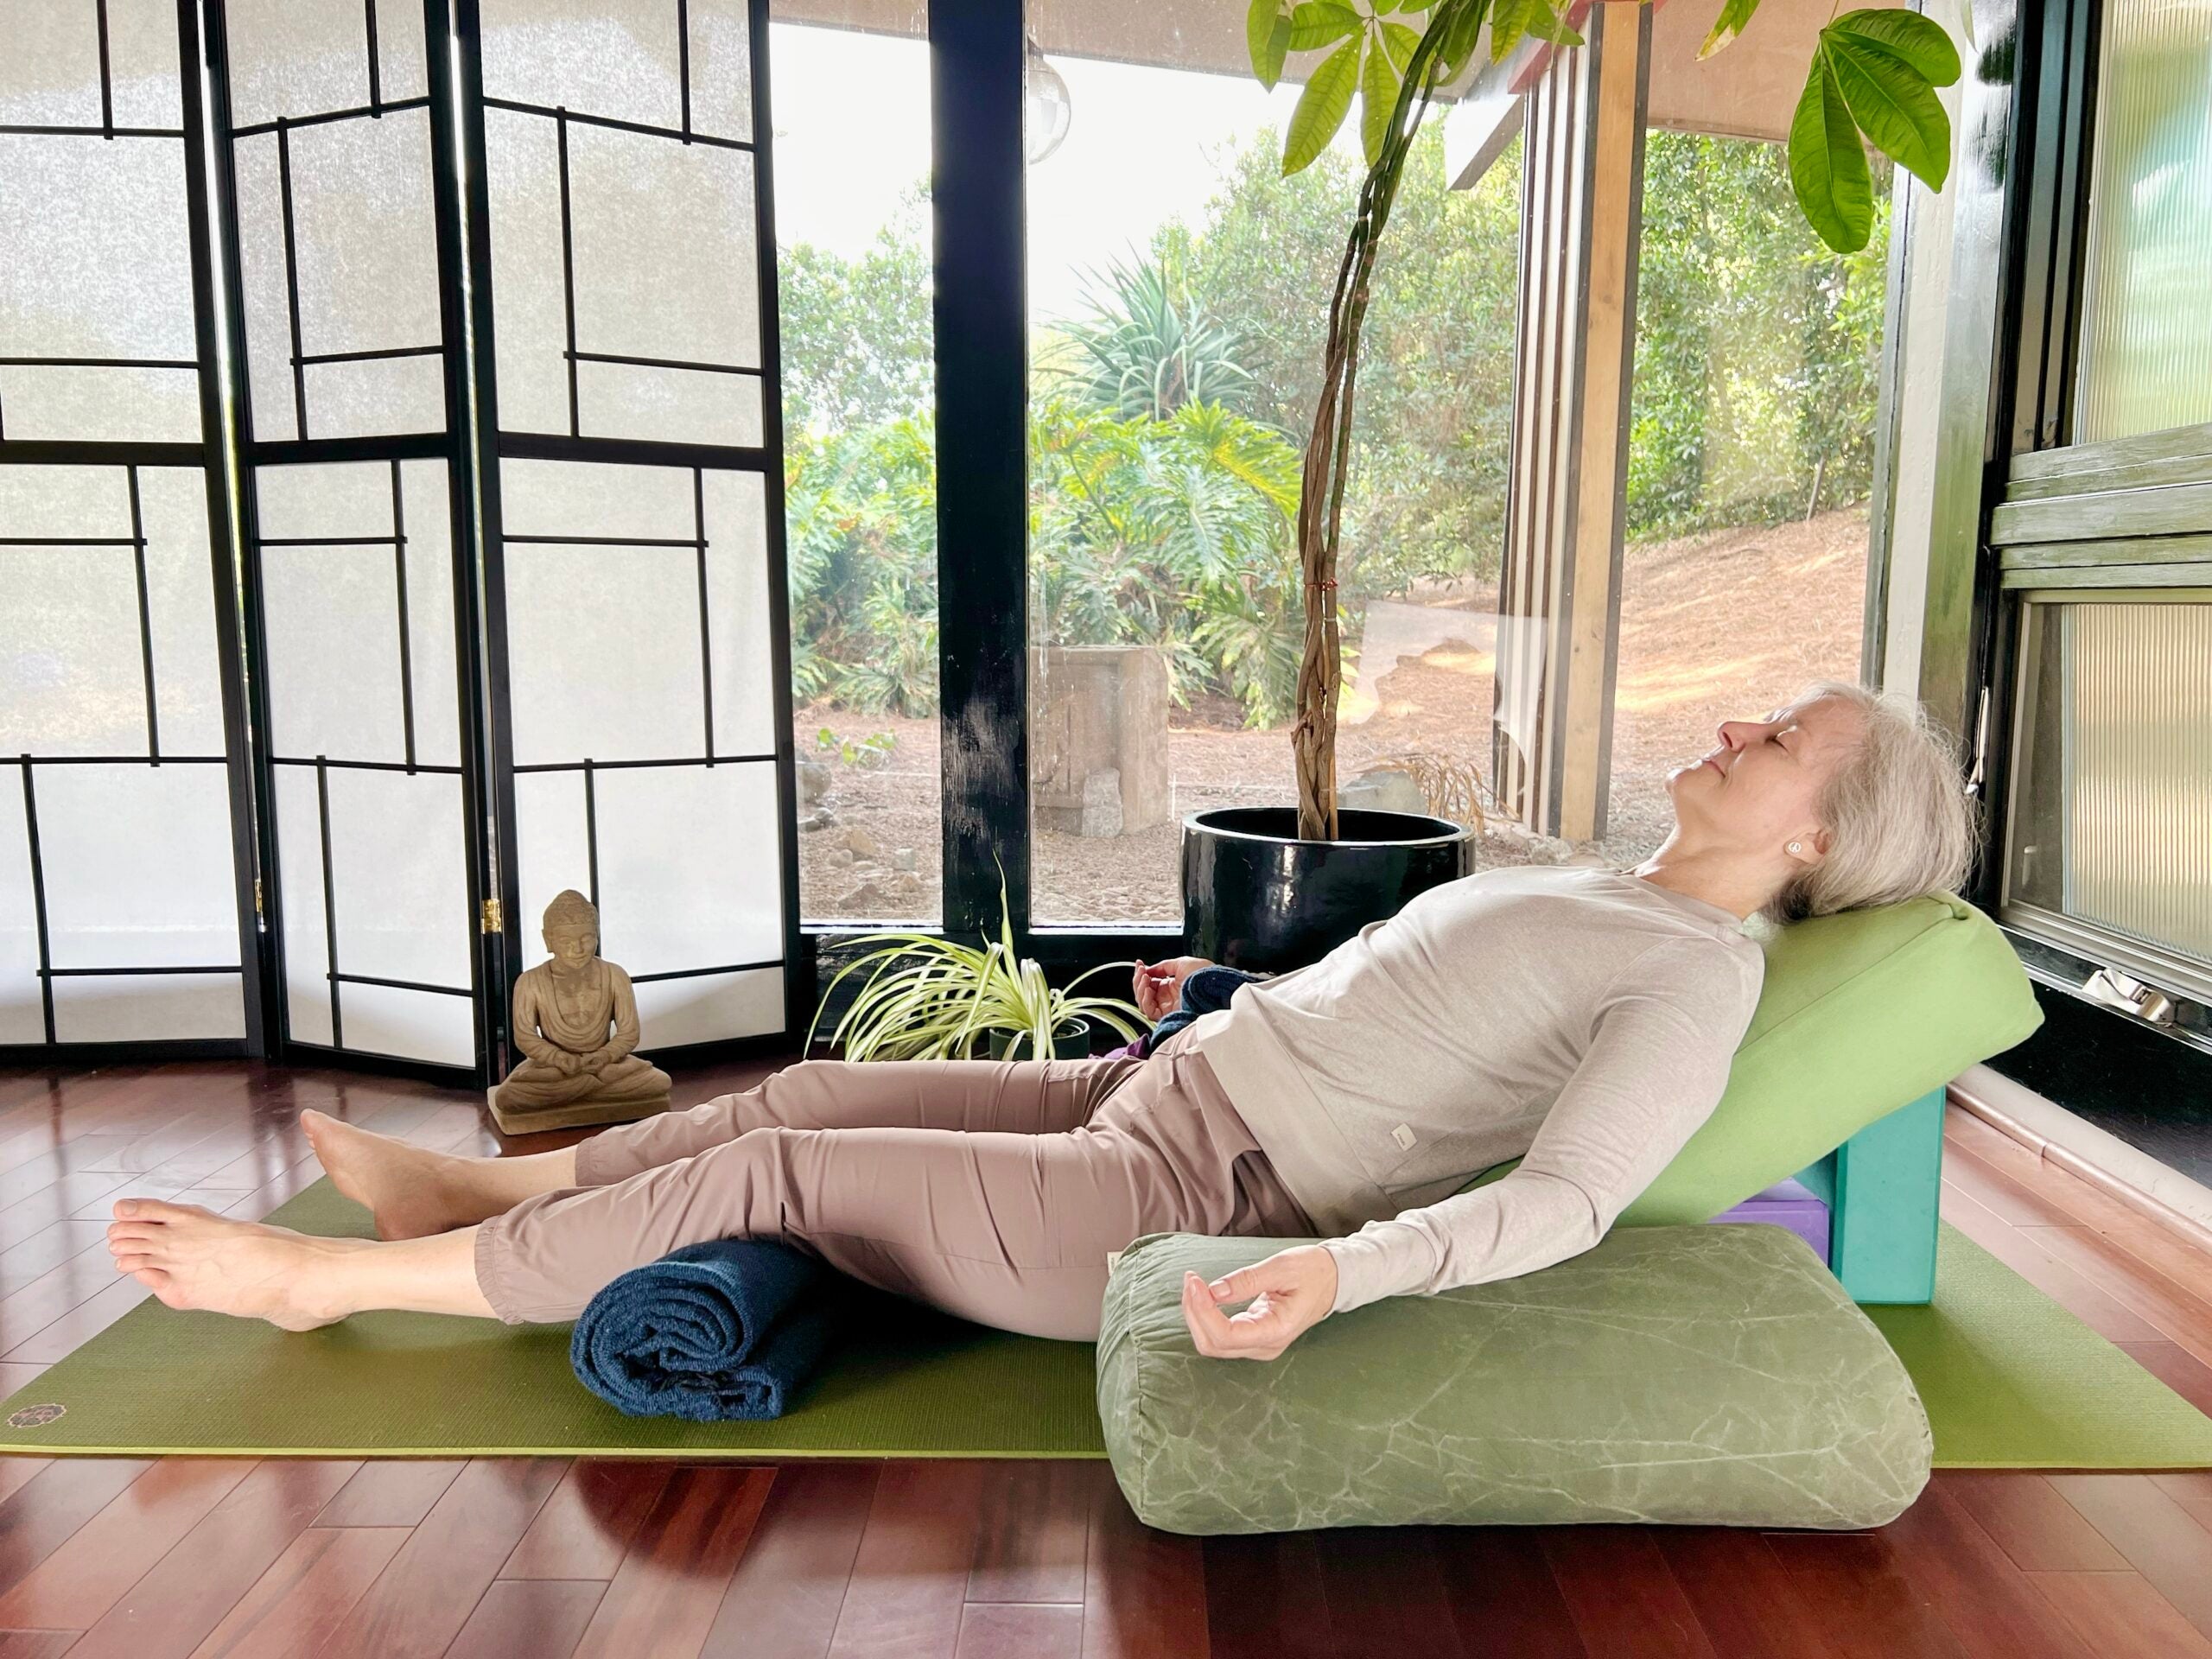 Restorative yoga as deep relaxation and prep for pranayama